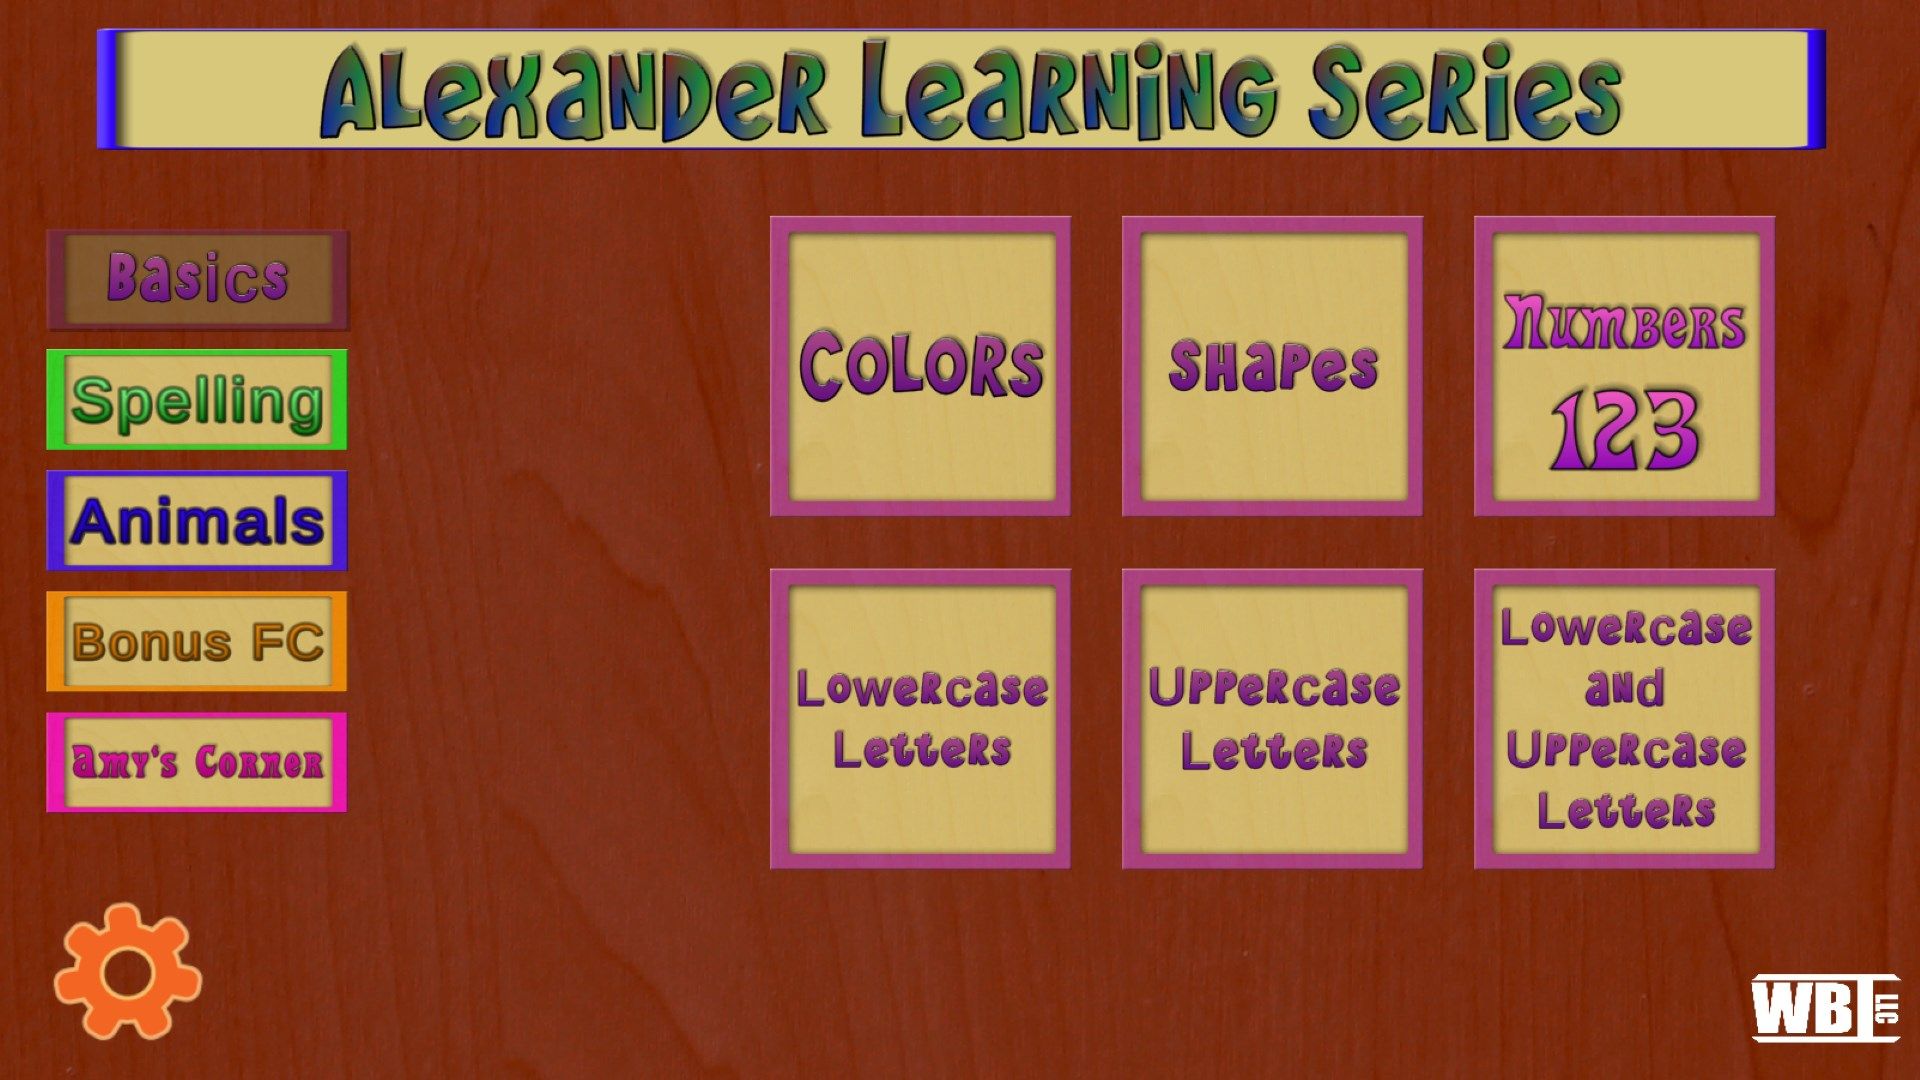 Alexander Learning Series II